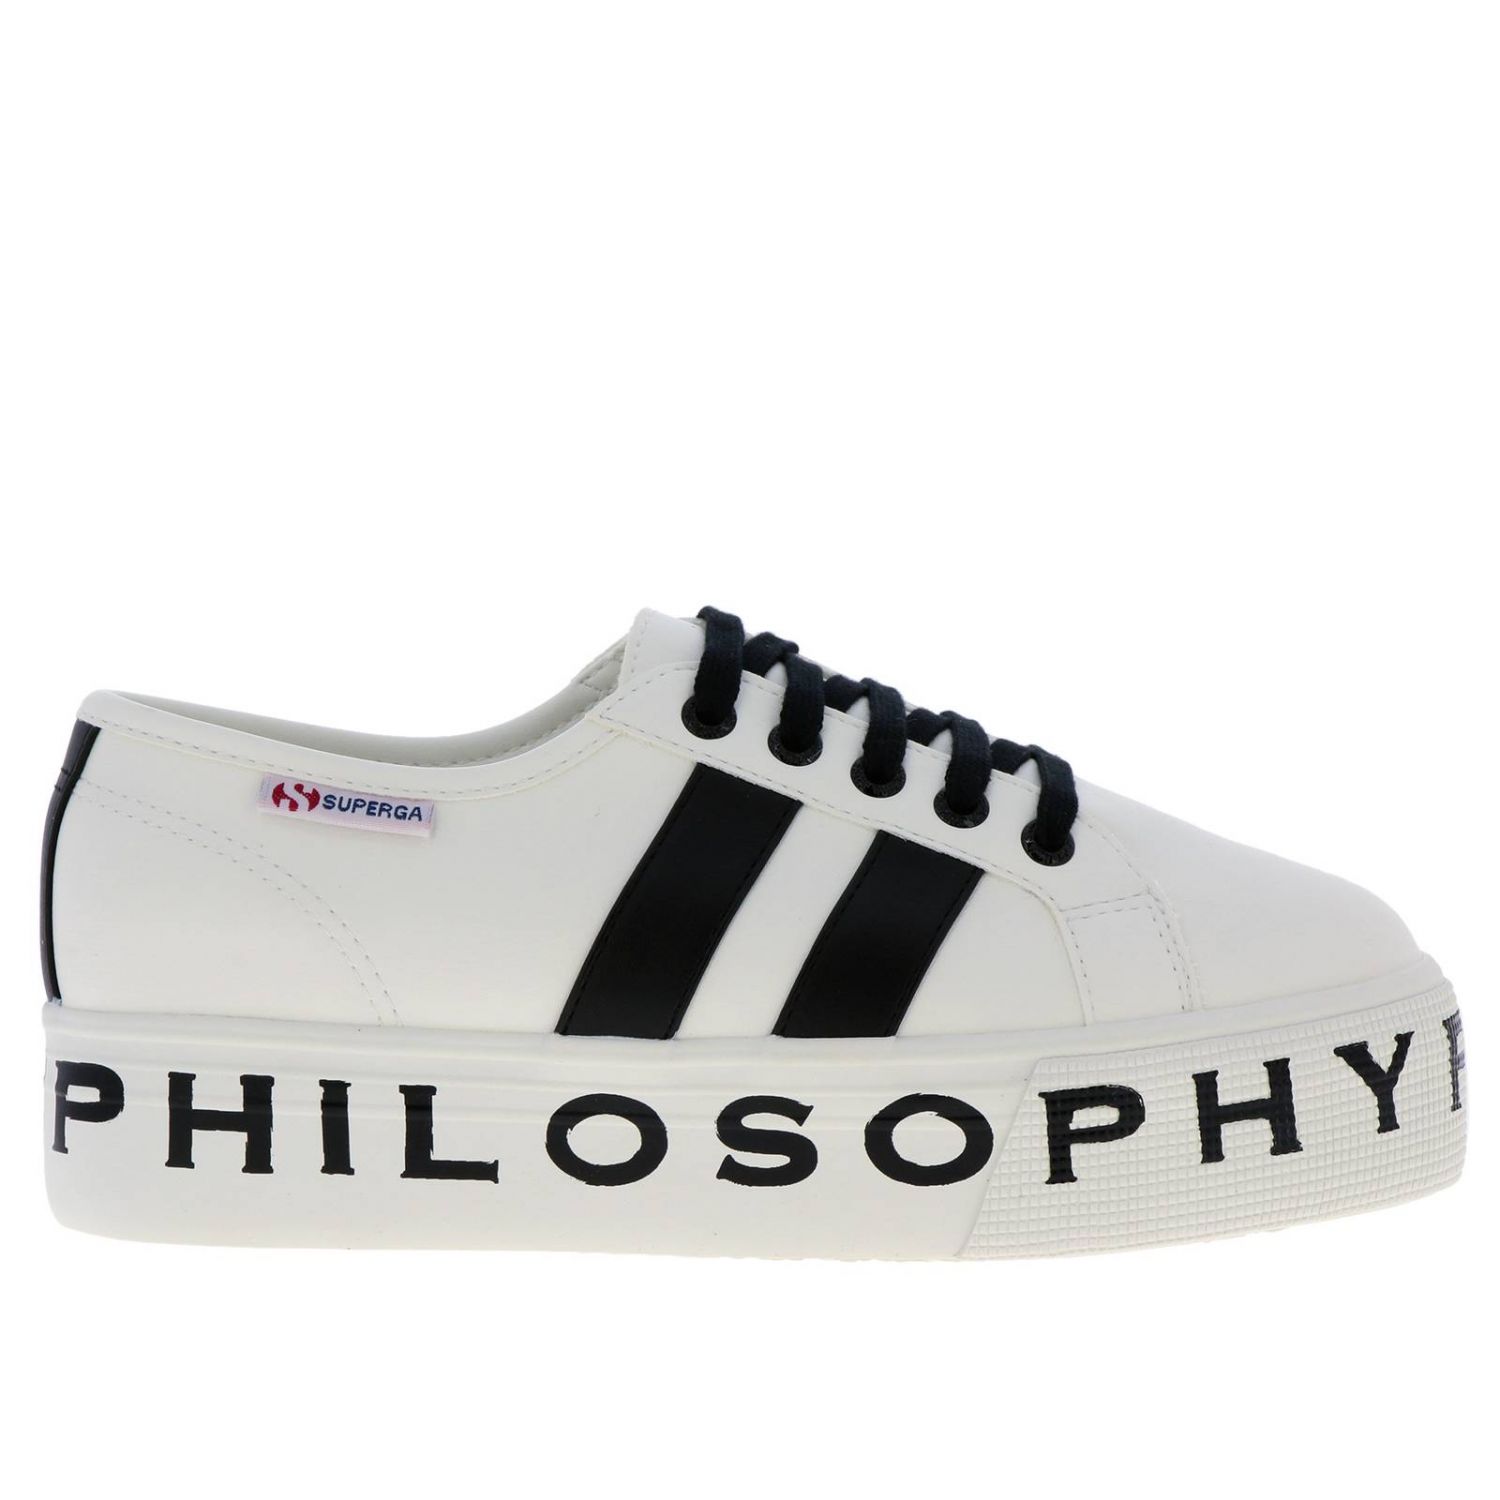 superga philosophy scarpe buy adda4 ed9ae